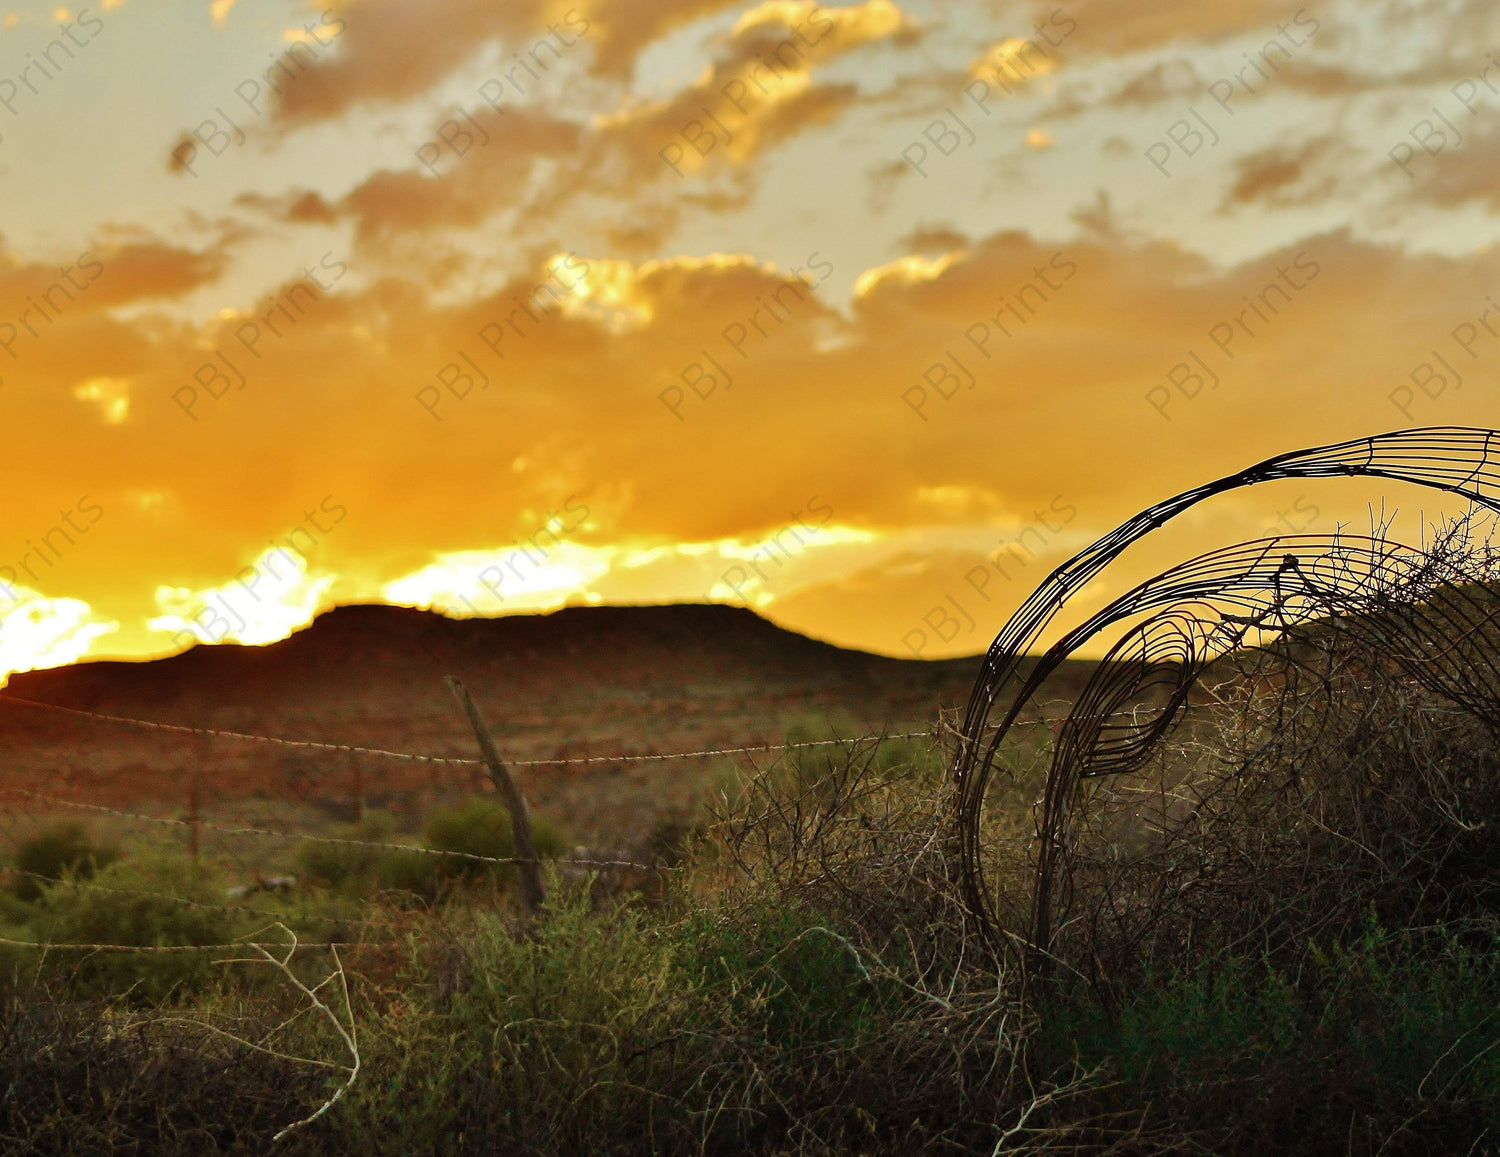 Western Mesa Sunset - Artist by Elizabeth Schrandt - Art Prints, Decoupage Rice Paper, Flat Canvas Prints, Giclee Prints, Photo Prints, Poster Prints